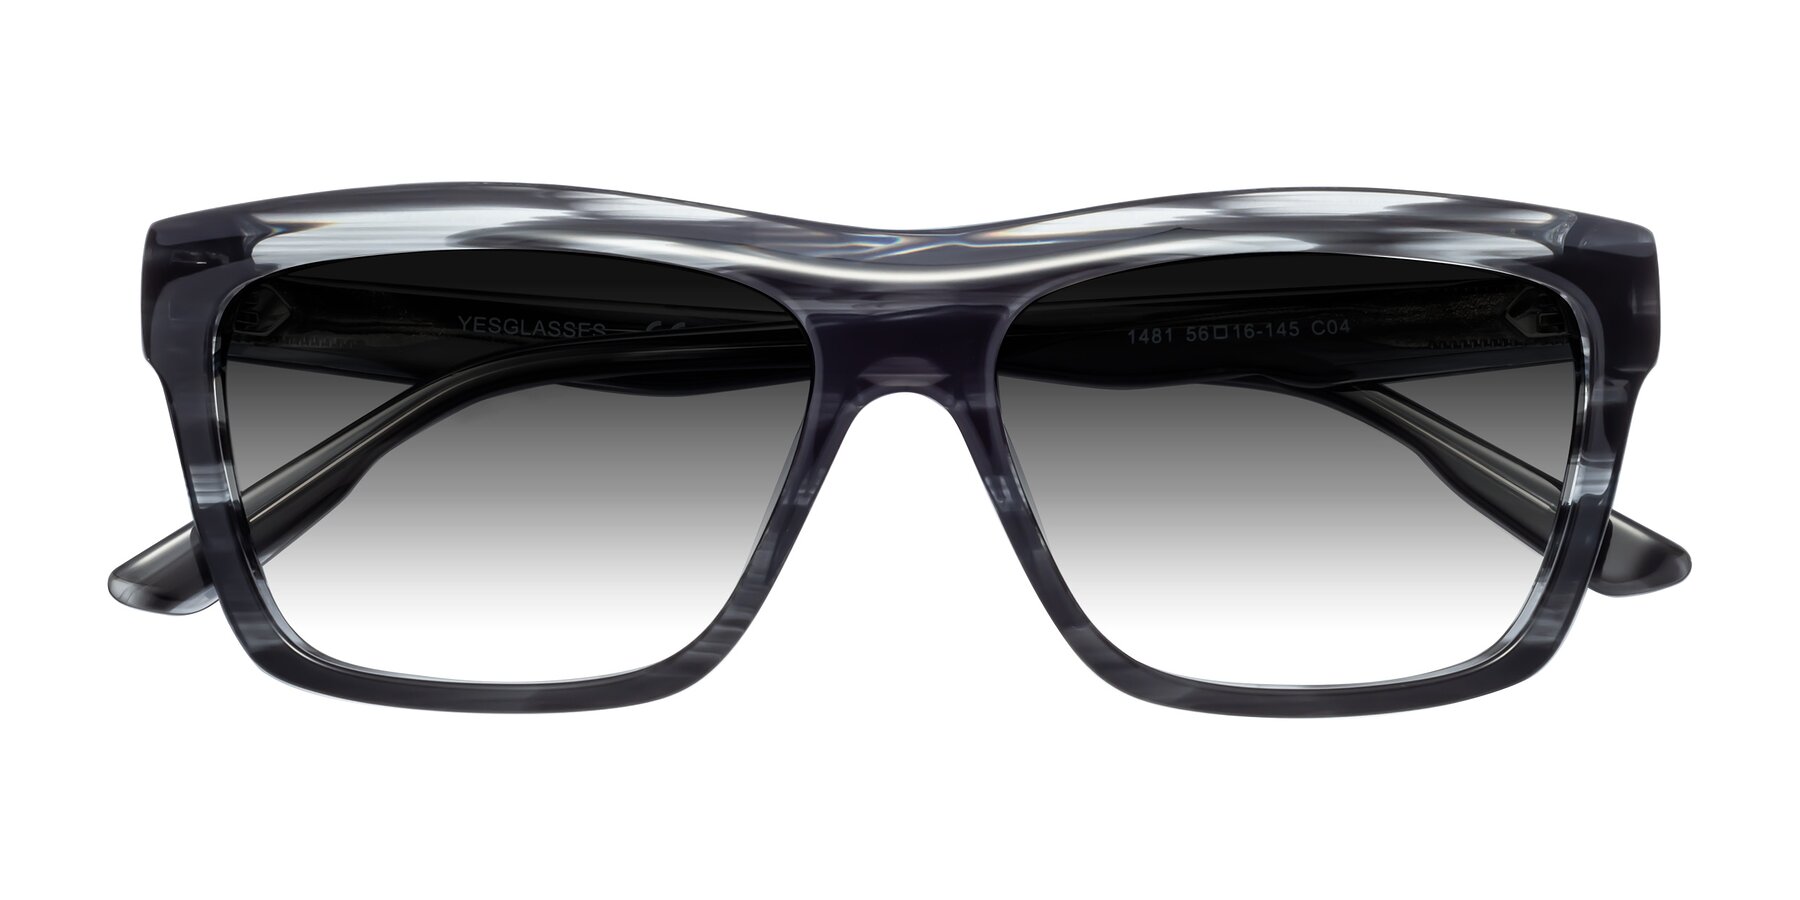 Stripe Gray Hipster Acetate Square Eyeglasses - 1481